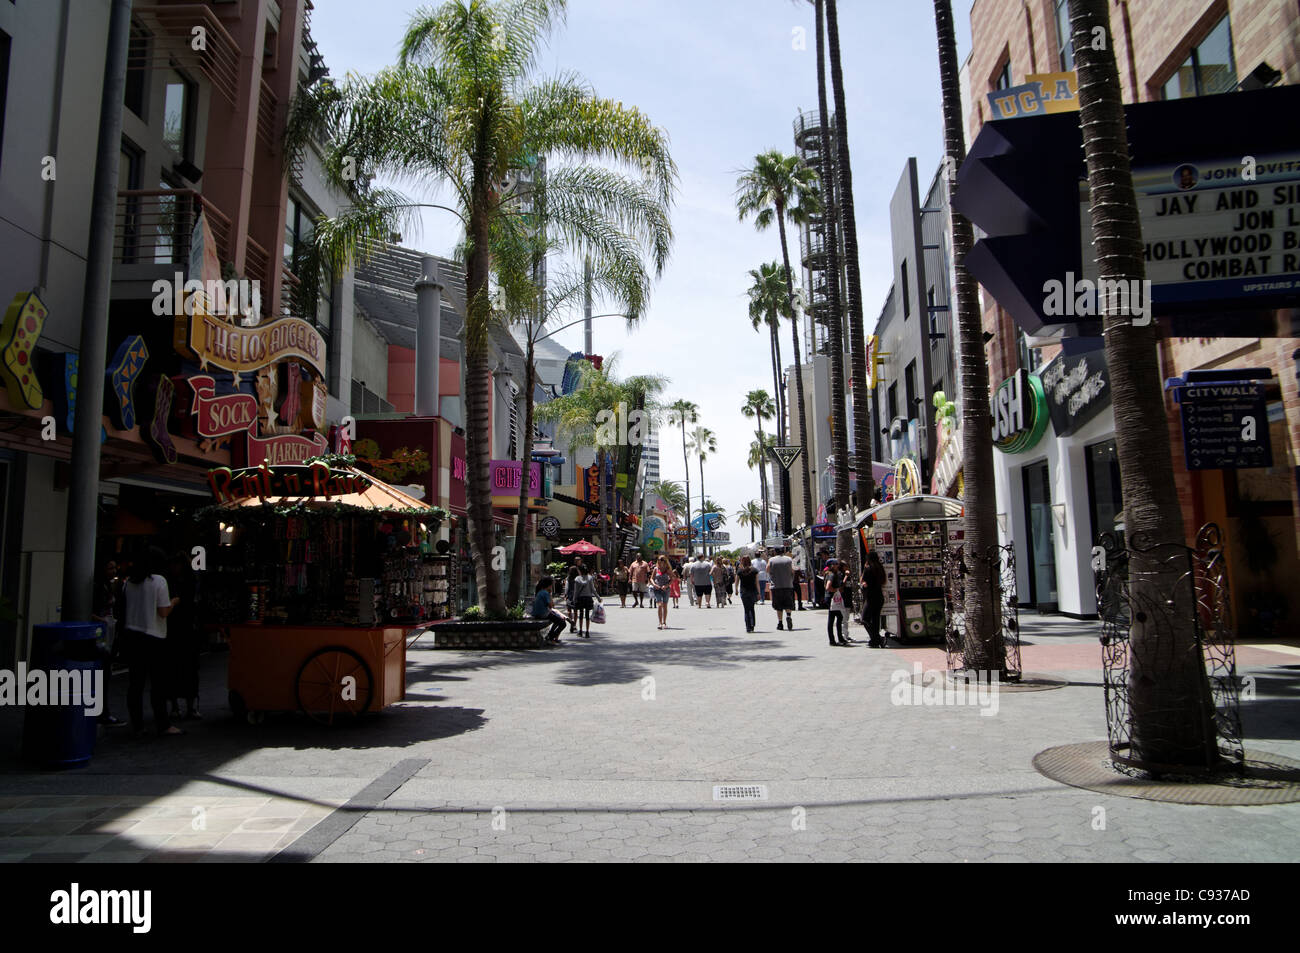 Entrance of Universal Studios - Hollywood - Los Angeles California Stock Photo